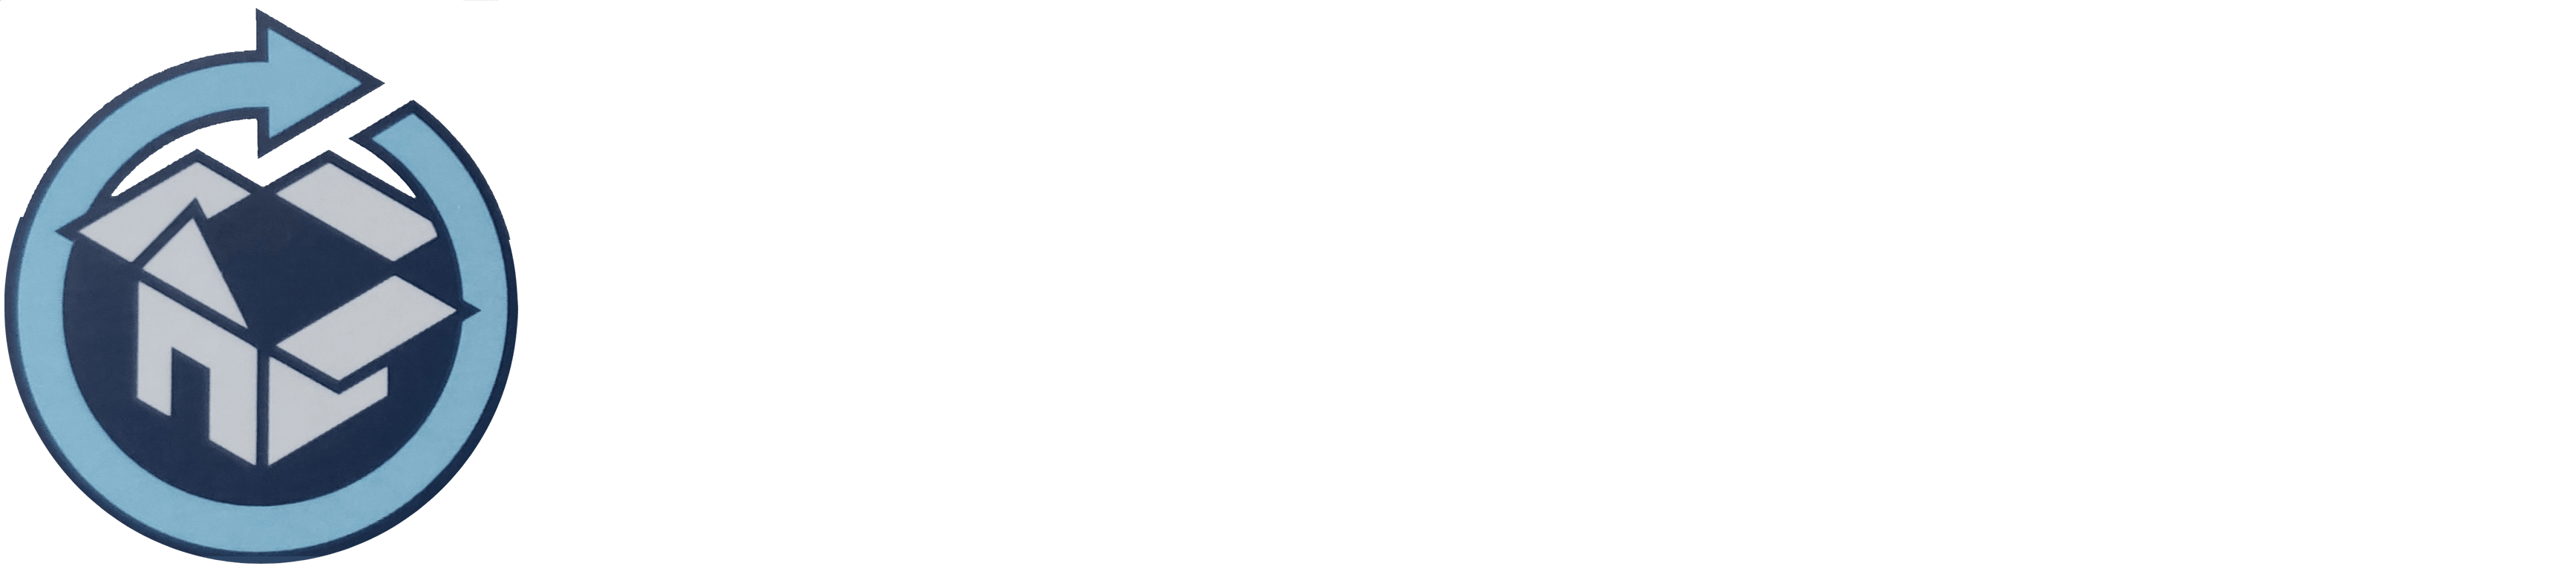 Canon Marine Self Storage